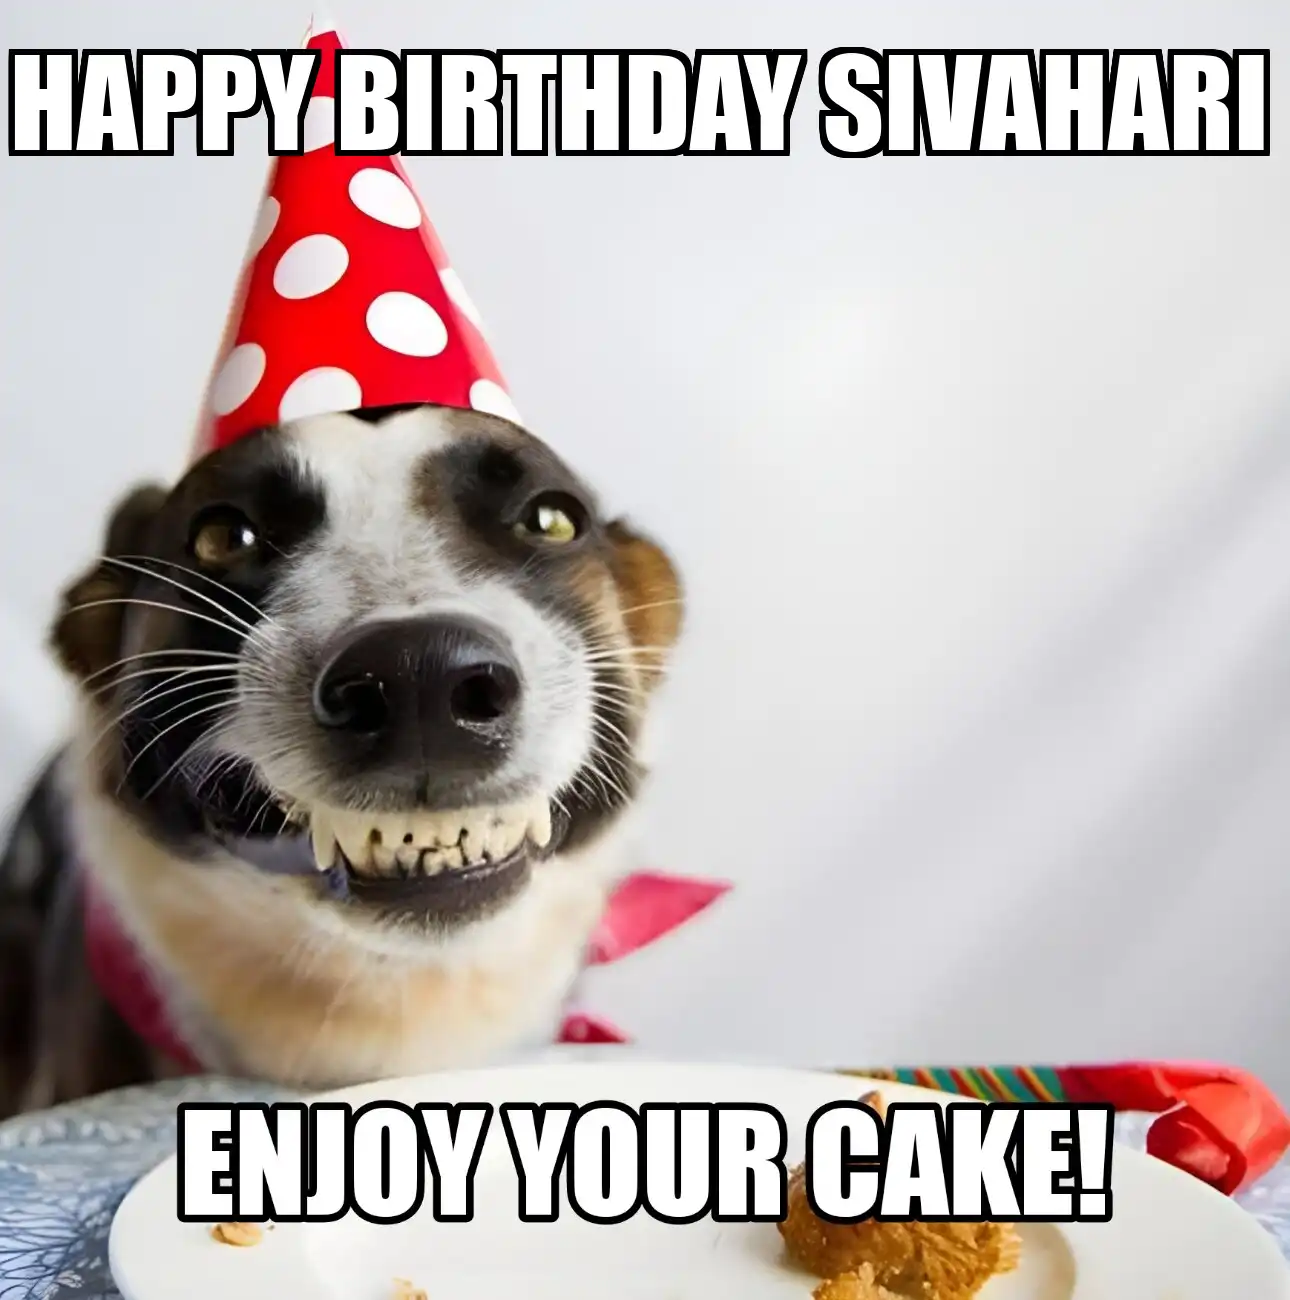 Happy Birthday Sivahari Enjoy Your Cake Dog Meme